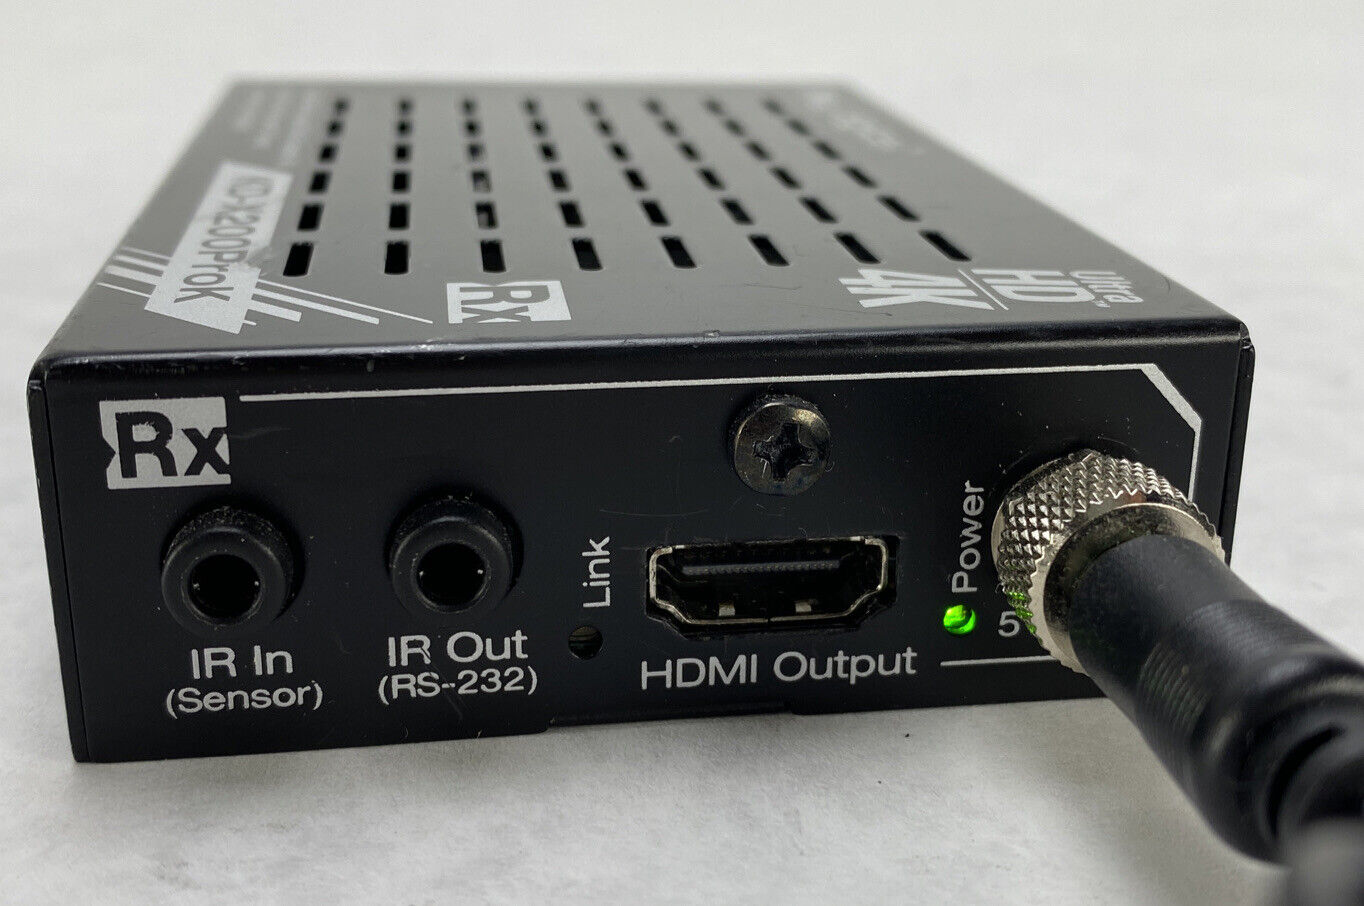 KeyDigital KD-X200ProK HDBaseT/HDMI CAT5e/6 RECIEVER Rx ONLY with PSU